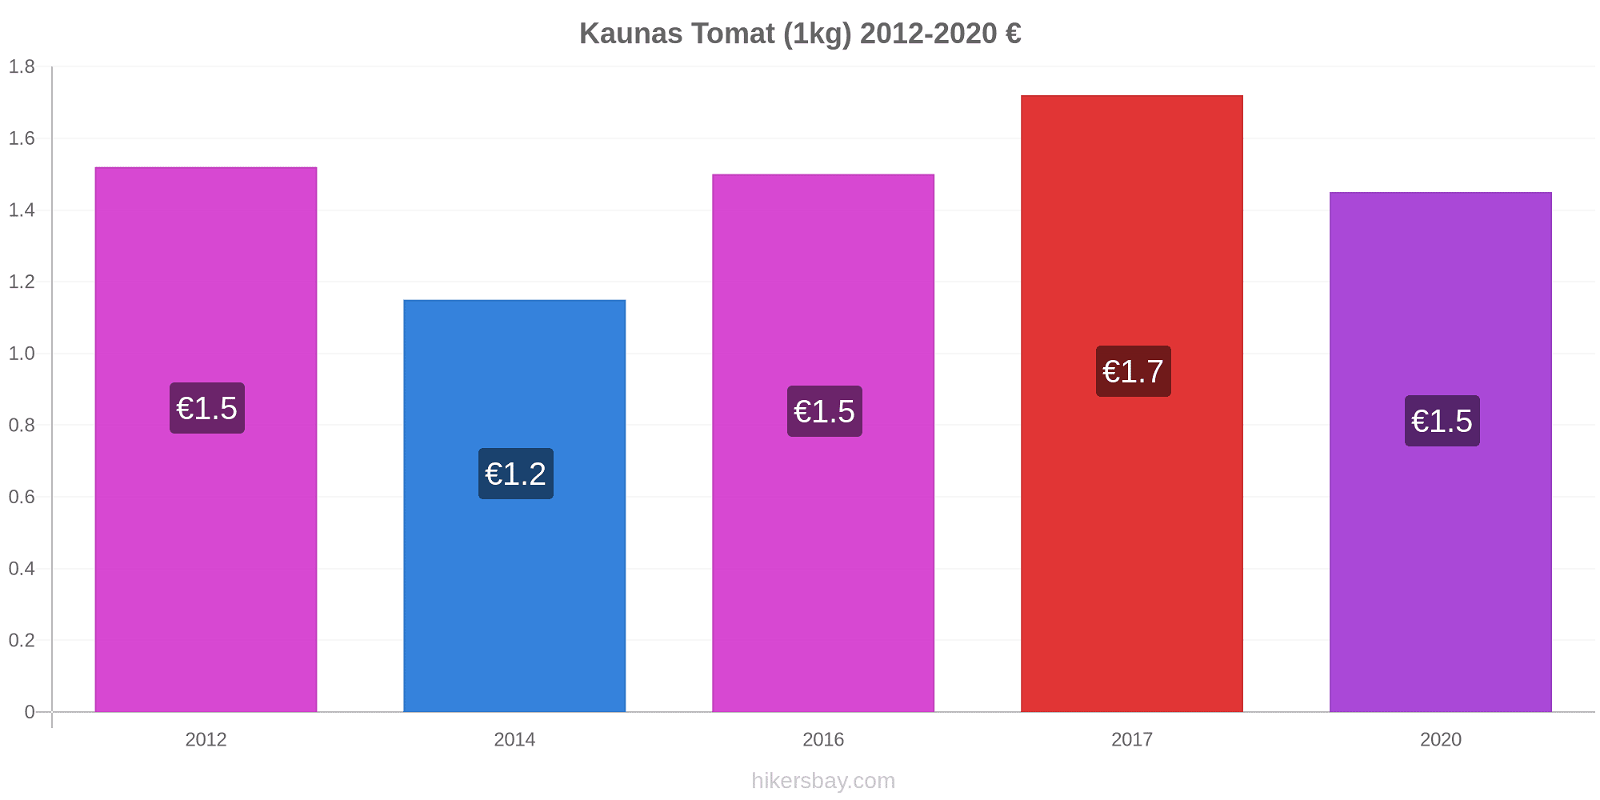 Kaunas prisförändringar Tomat (1kg) hikersbay.com